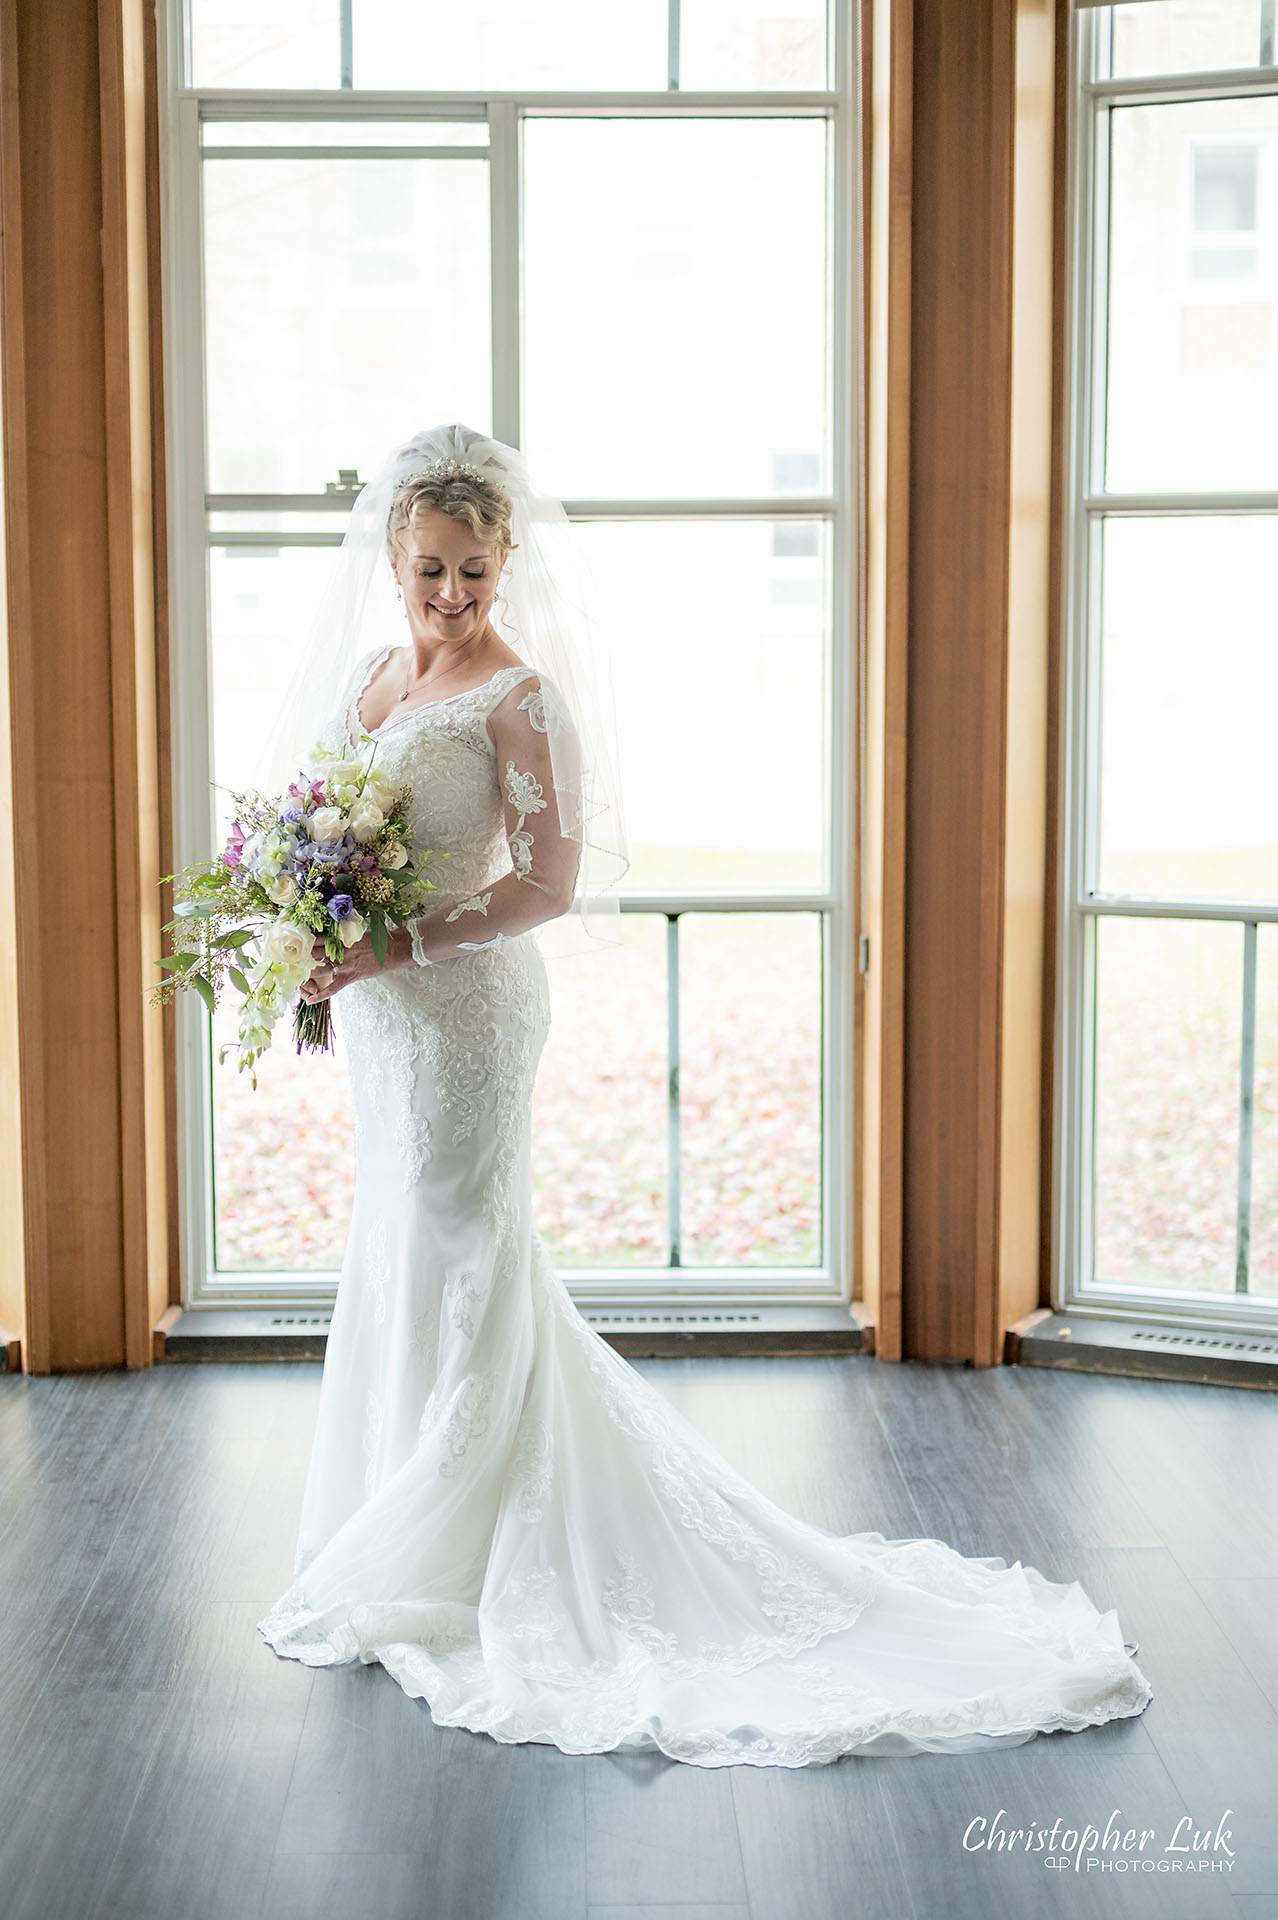 Christopher Luk Toronto Wedding Photographer Natural Candid Photojournalistic Tyndale Chapel Bride Bridalane White Bridal Gown Dress Portrait Floral Bouquet Veil 